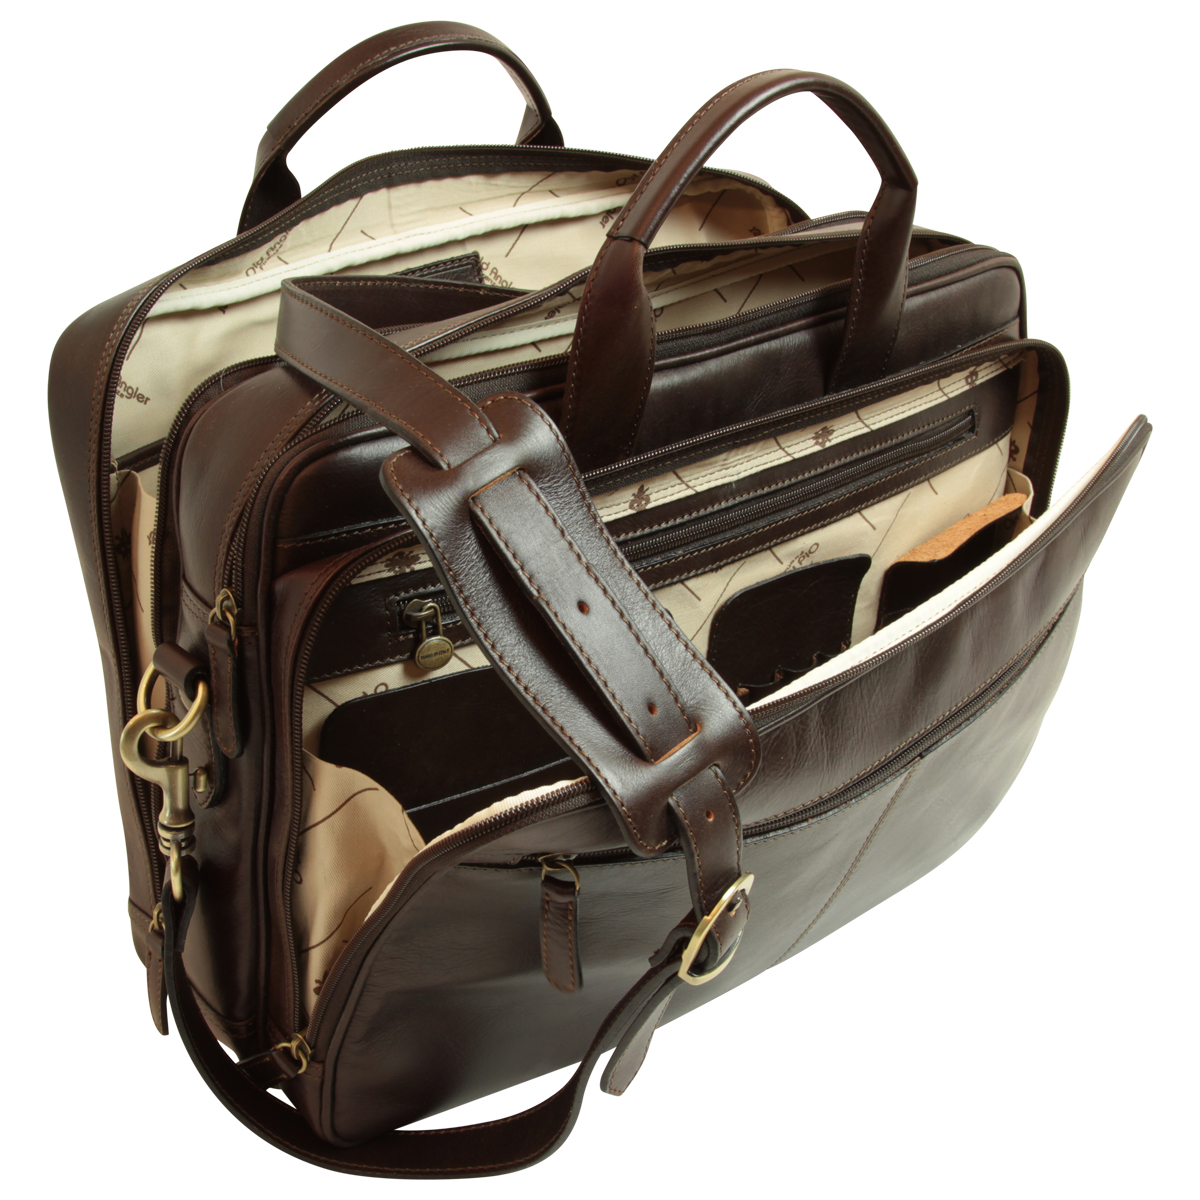 Italian Leather Briefcase - Dark Brown | 209589TM US | Old Angler Firenze